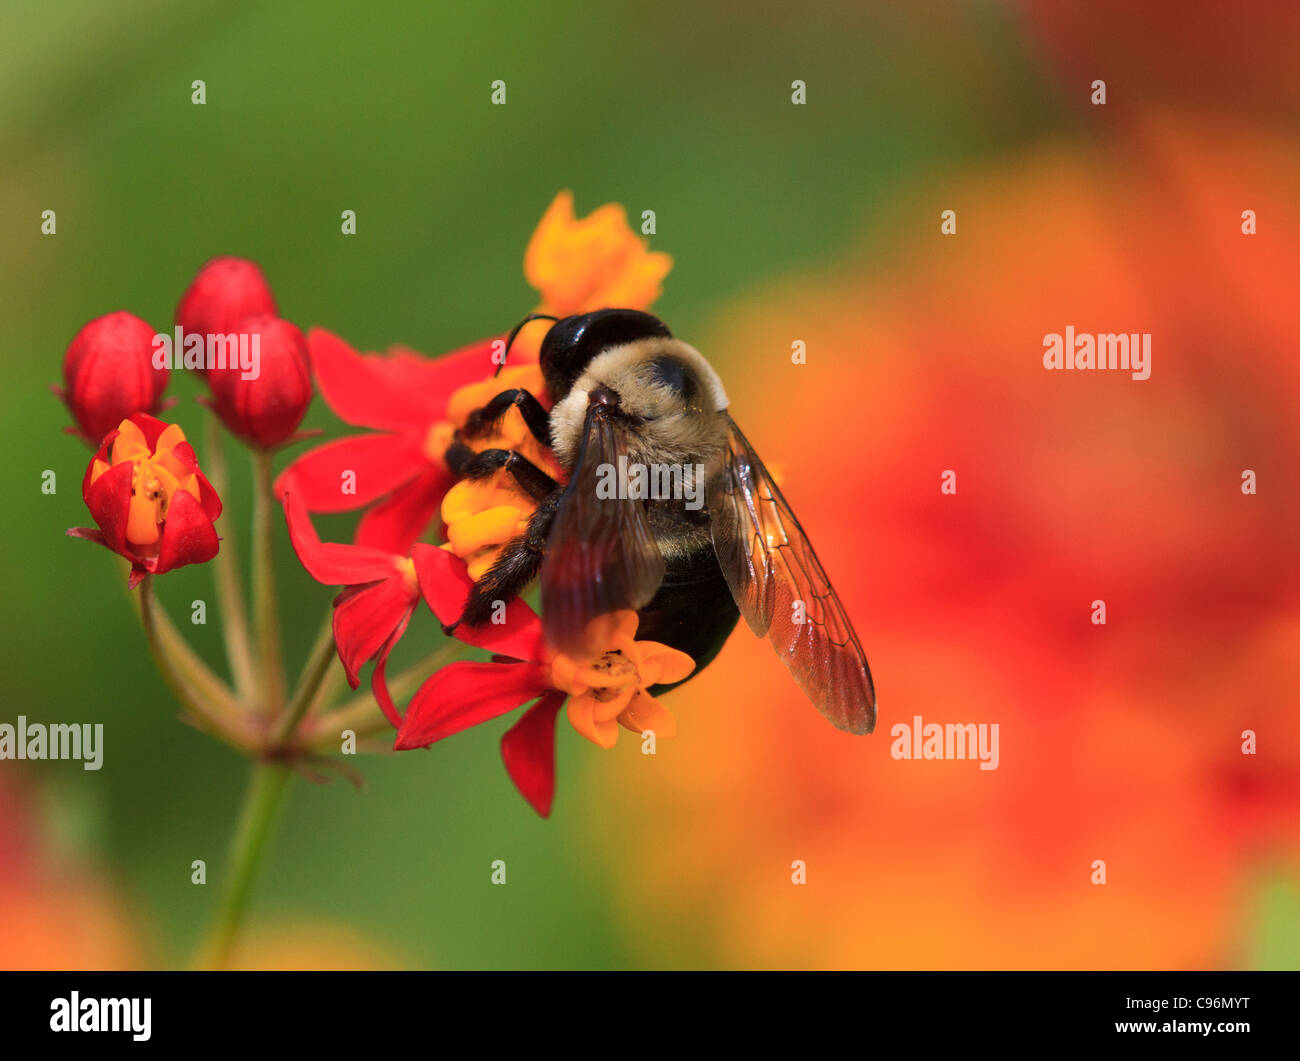 Hummel auf Blume (Bombus sp.) Stockfoto